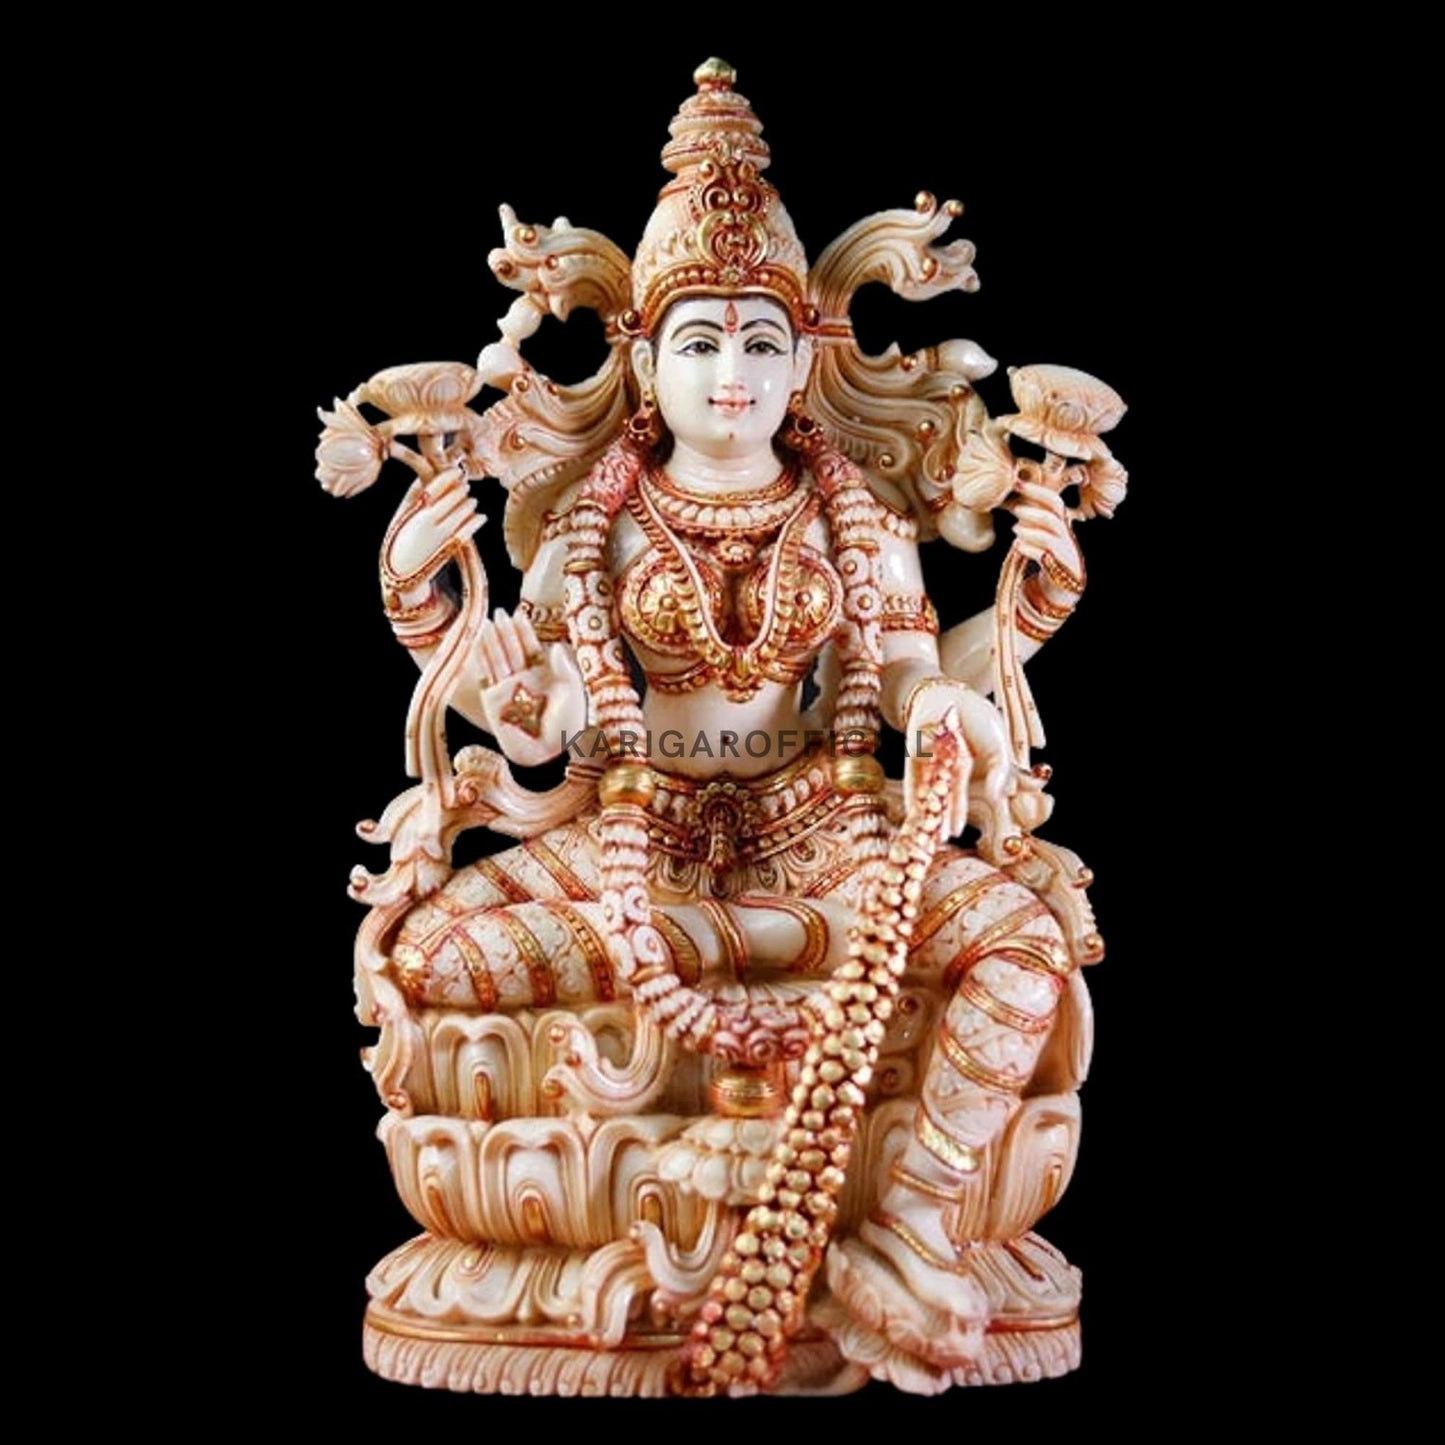 Lakshmi statue 15 inches Large Laxmi Murti Marble Indian goddess Lakshmi Idol Big Marble Figurine Laxmi Money goddess of wealth Laxmi idol Lakshmi Diwali Wedding Anniversary Gifts Home decor sculpture